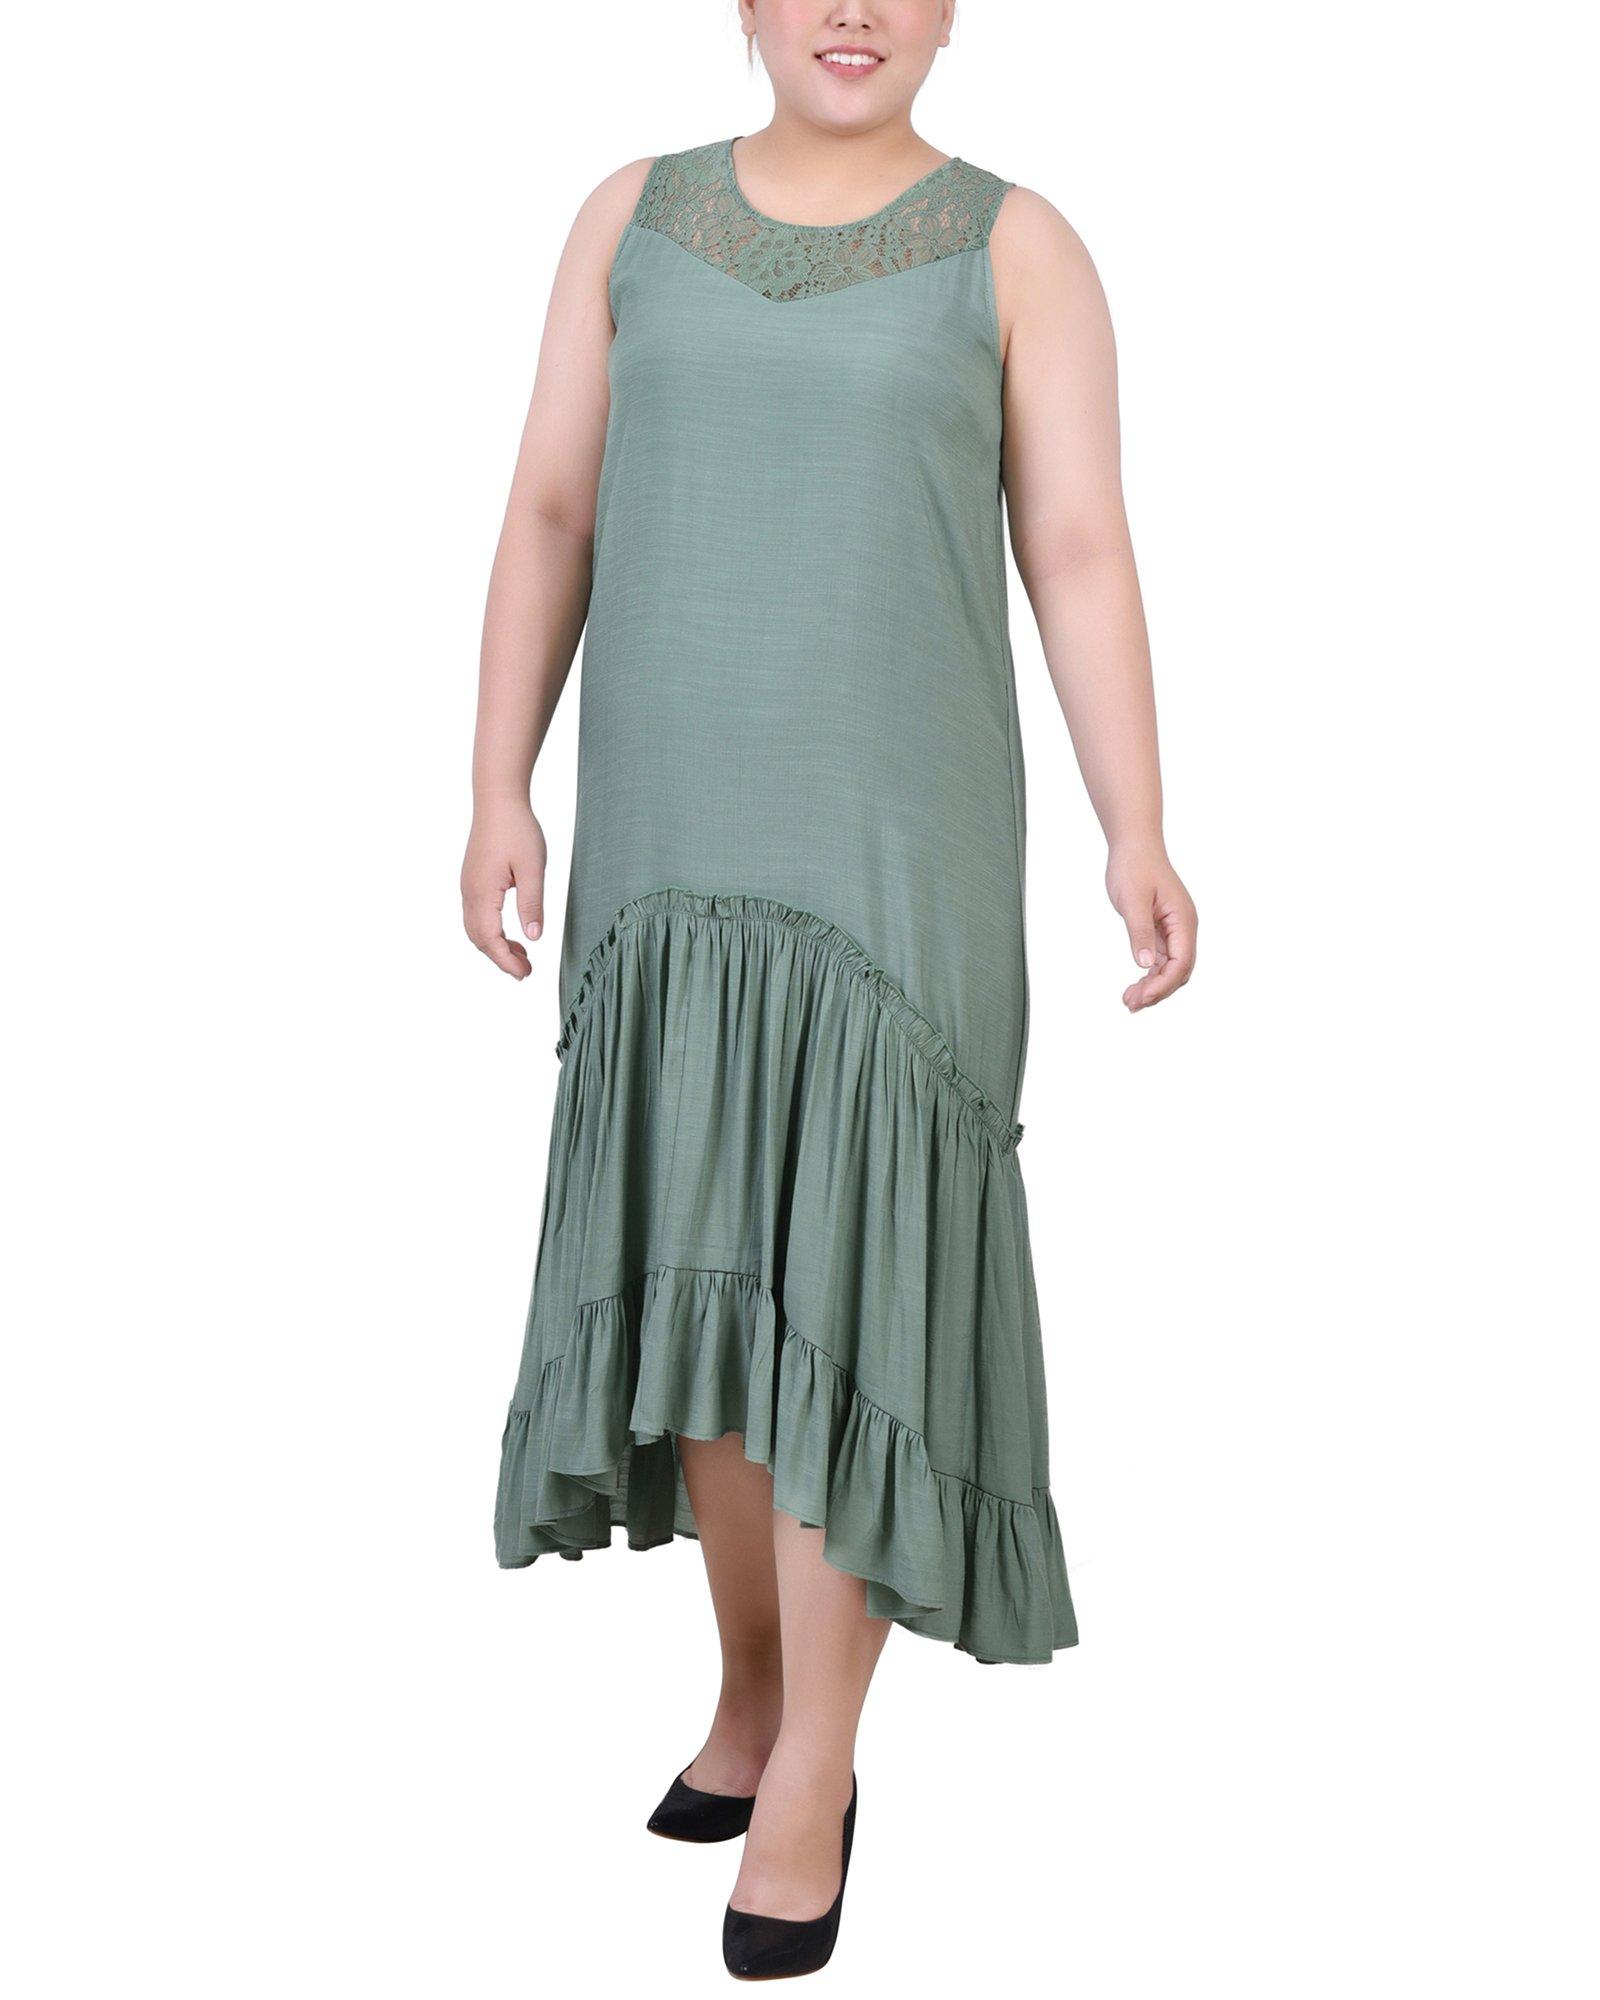 Womens Plus Size Sleeveless Tiered Maxi Dress